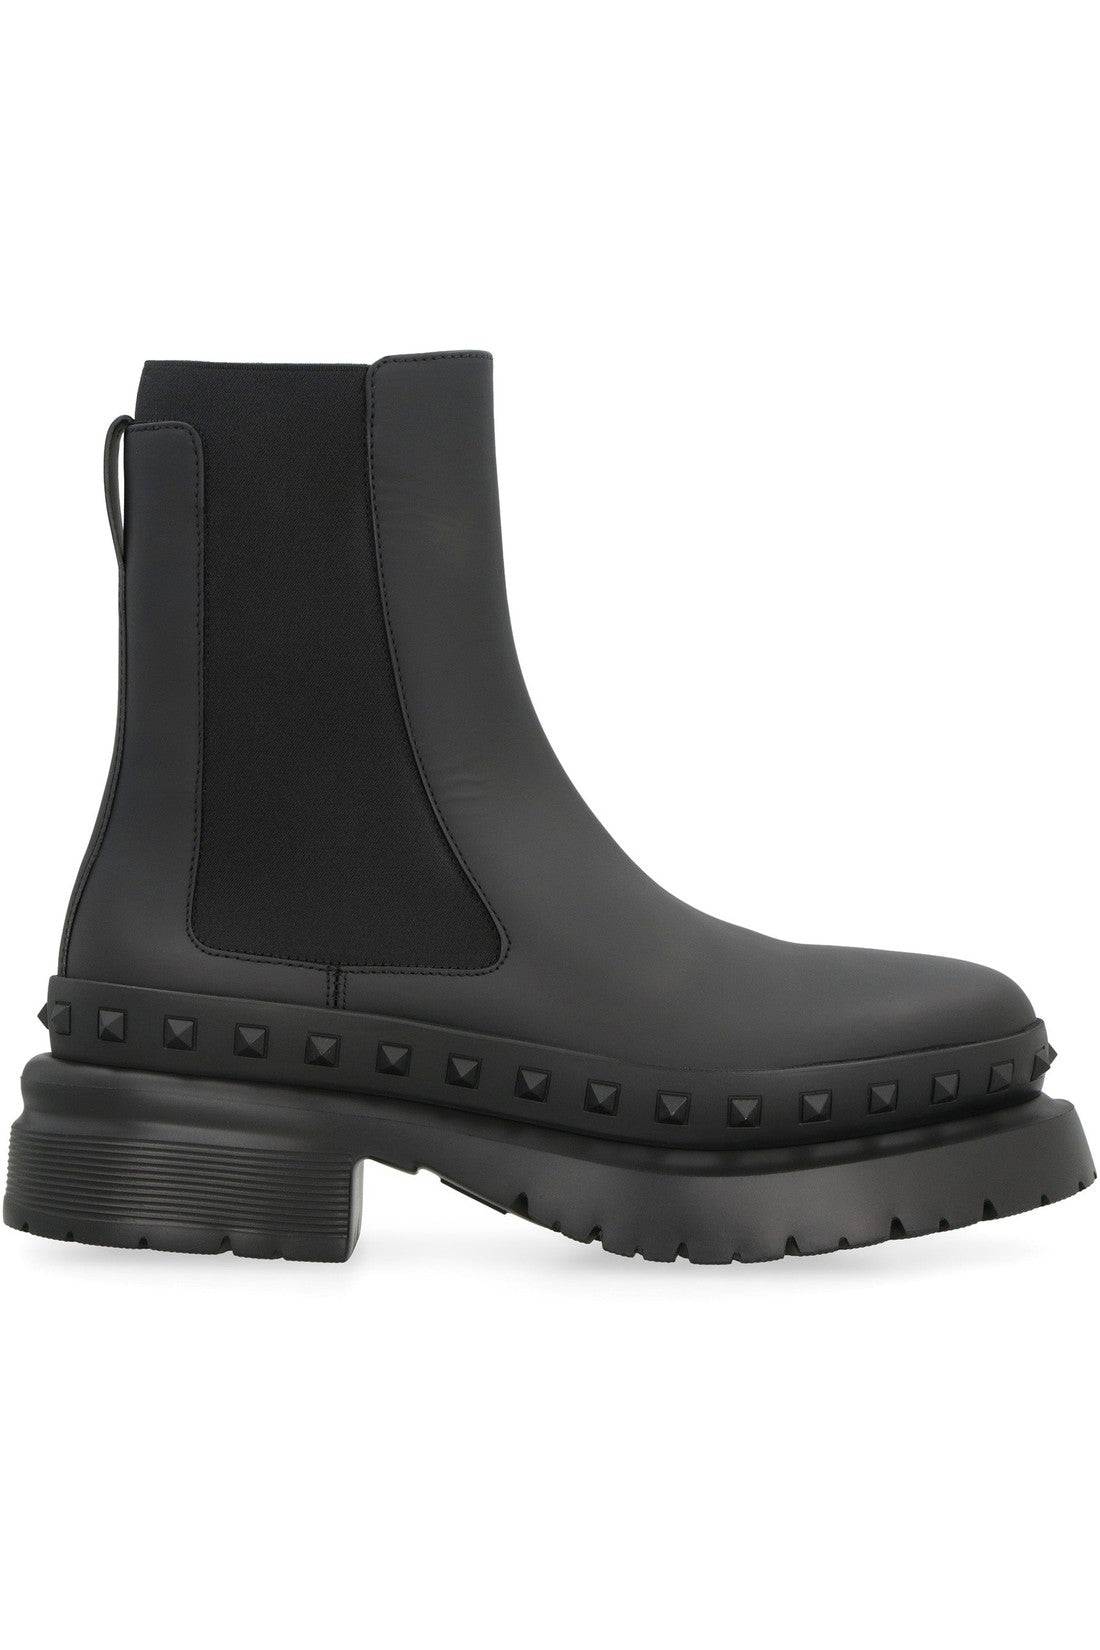 Valentino-OUTLET-SALE-Valentino Garavani - Rockstud M-Way leather Chelsea boots-ARCHIVIST